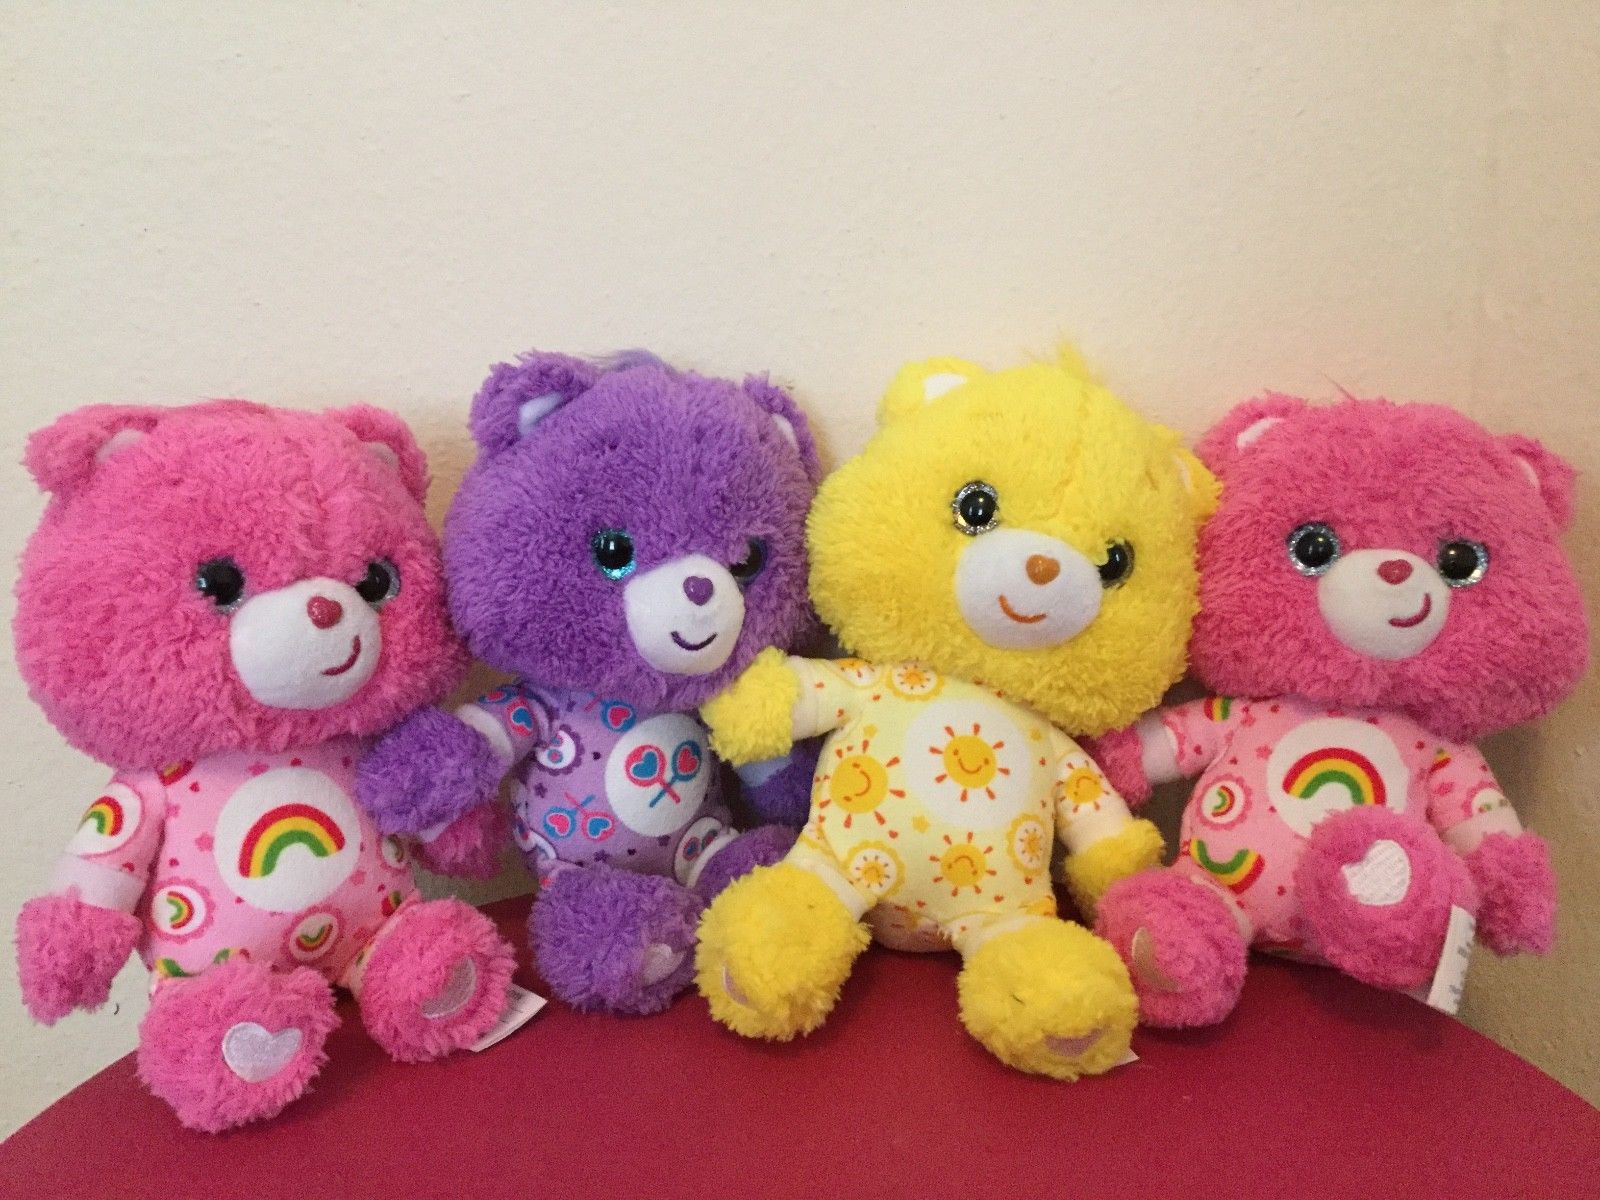 Care Bear Cubs Fleece Pajama Party Edition Funshine Share Cheer Bear Lot of 4! 